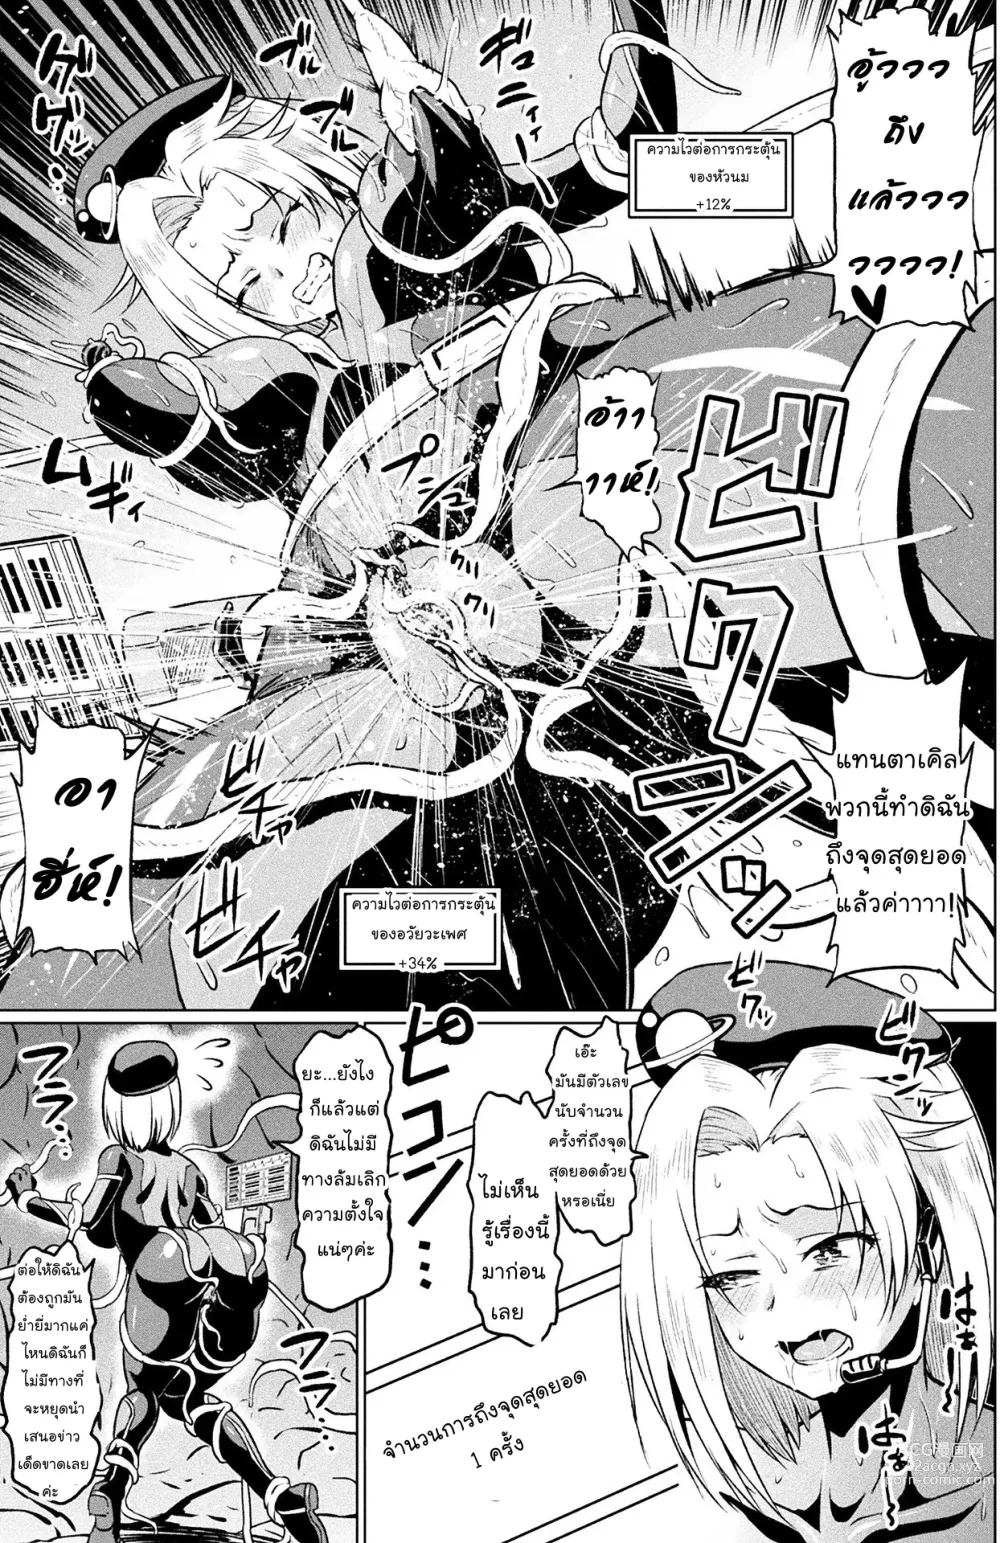 Page 5 of manga Totsugeki Chousa!! Space Scoop